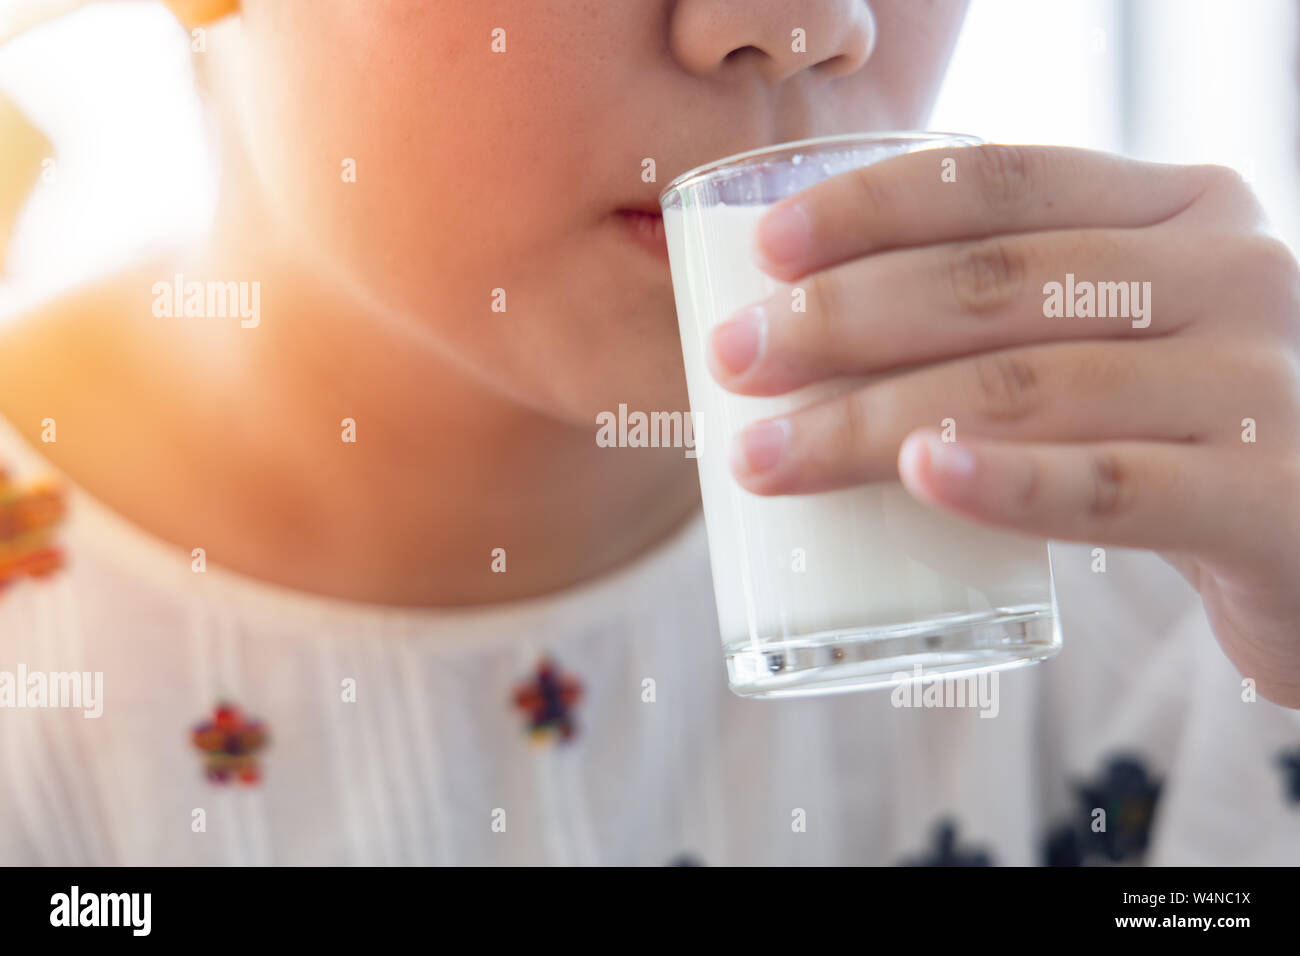 Fat Girl Teen Drinking Milk for healthy, Cow Milk or Goat Milk. Stock Photo